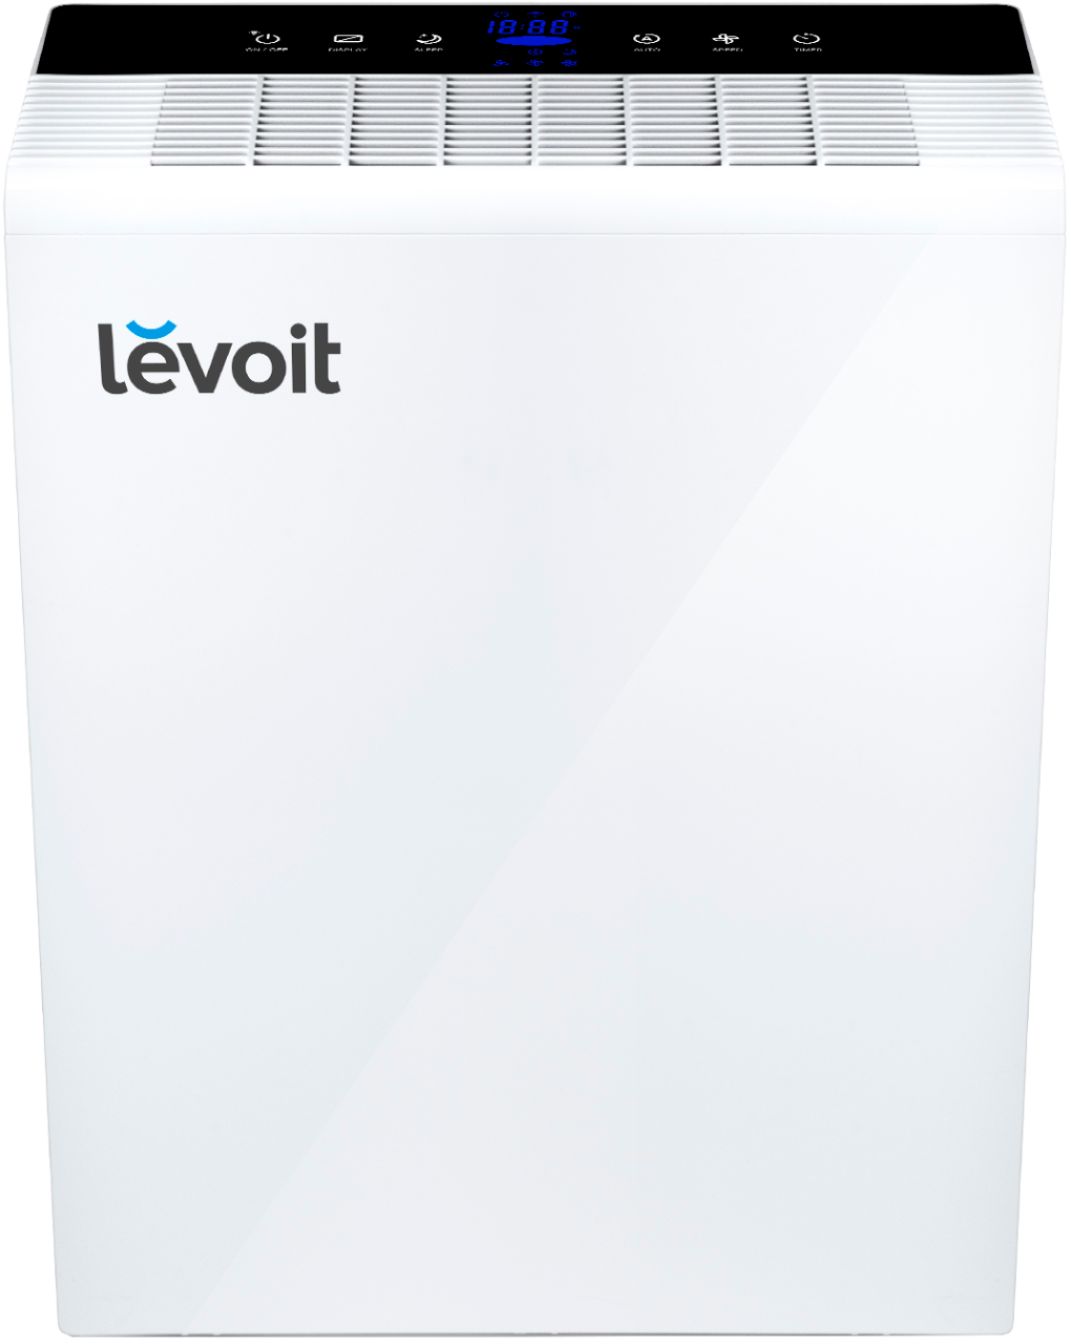 Levoit TruClean Smart 360 Sq. Ft True HEPA Air Purifier White